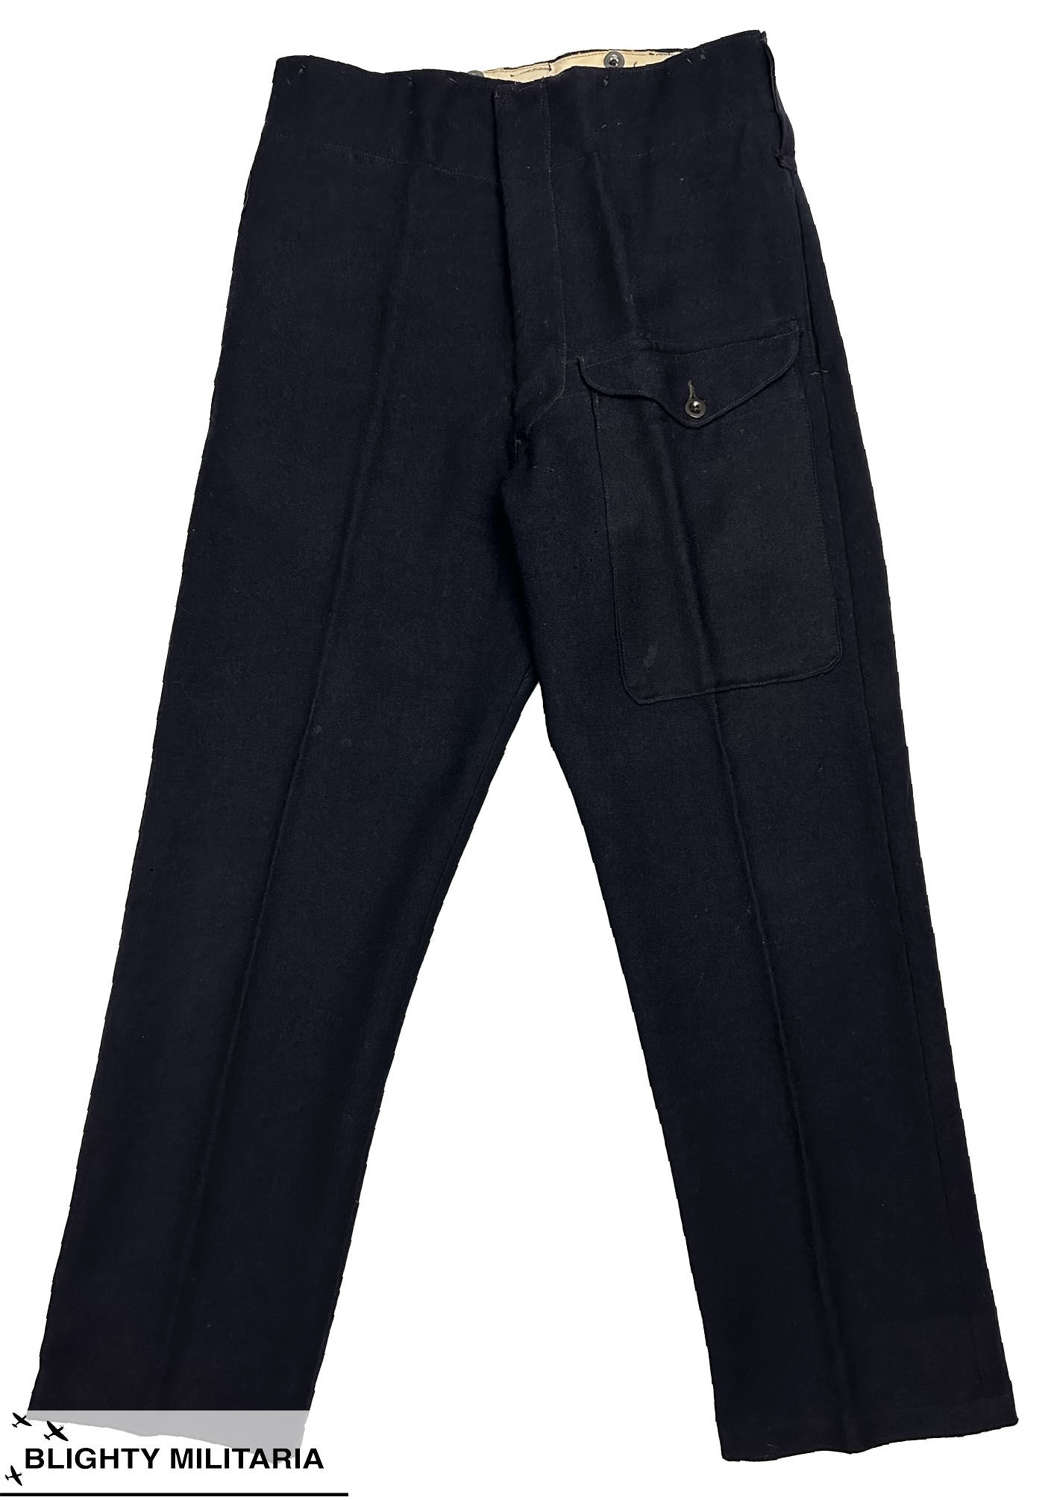 Original 1943 Dated Civil Defence Battledress Trousers - Size 34x33